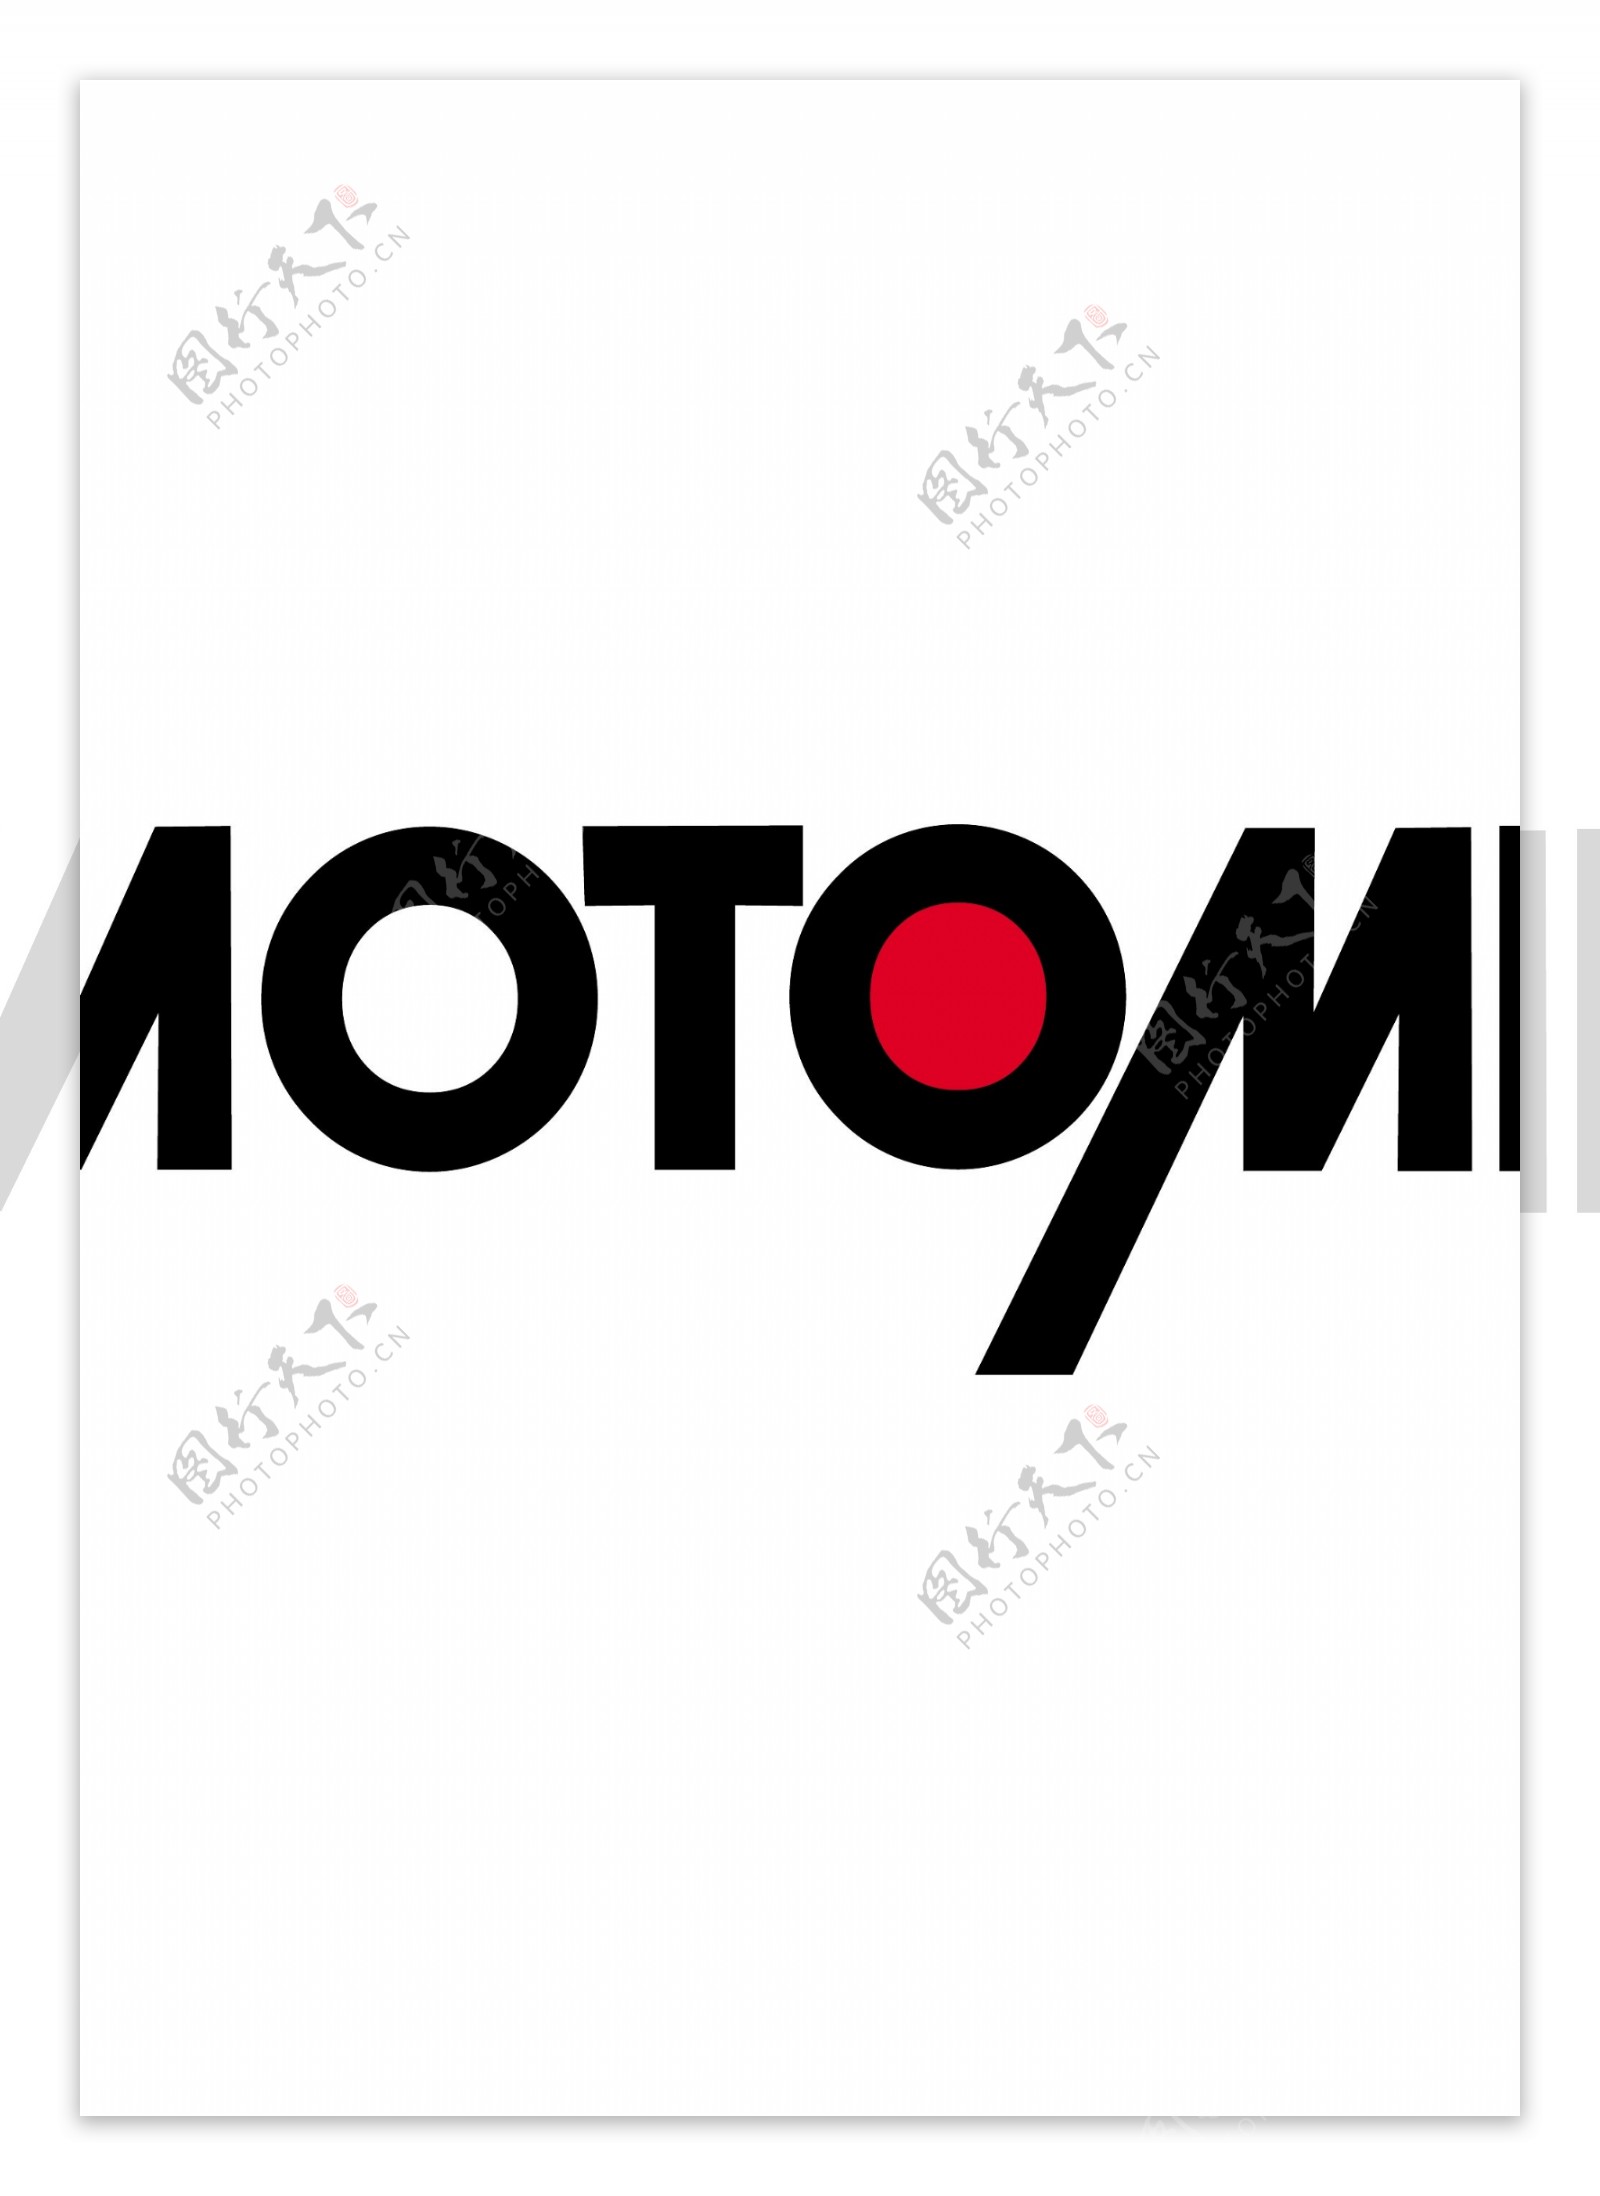 Motomillogo设计欣赏Motomil化工业LOGO下载标志设计欣赏